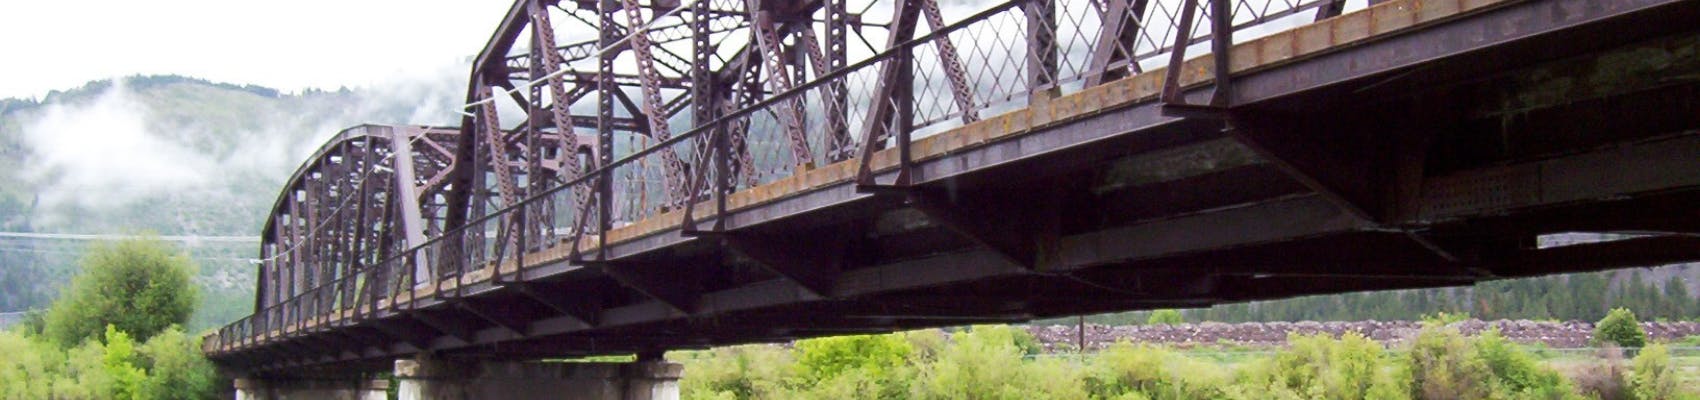 The Bonner-Milltown bridge on a cloudy day.